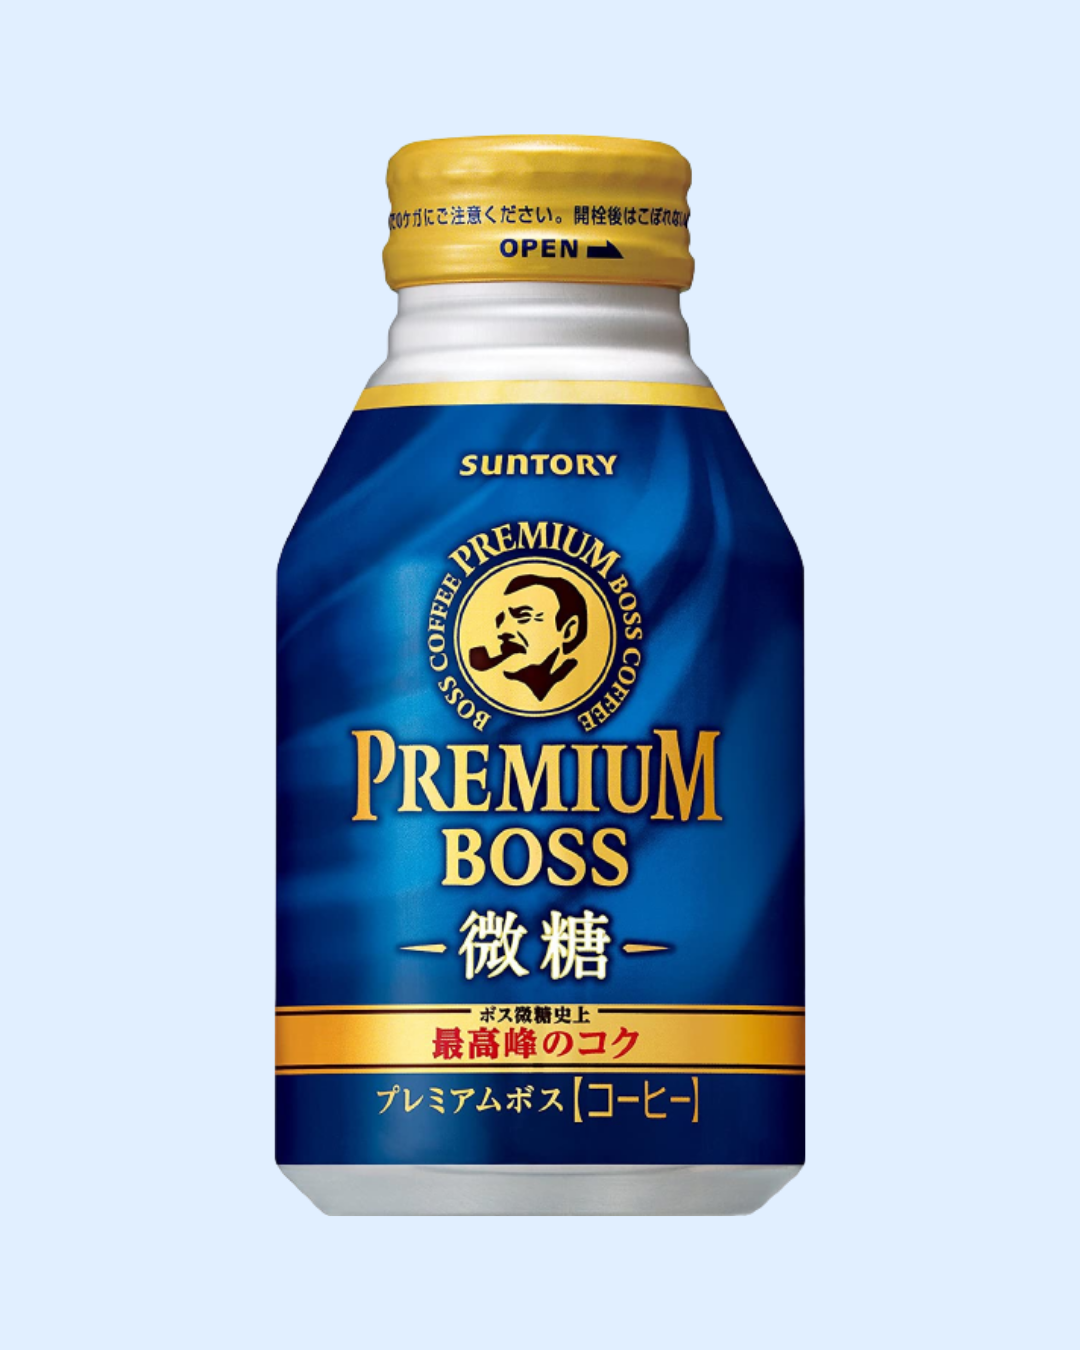 Suntory Premium Boss Less Sugar Coffee